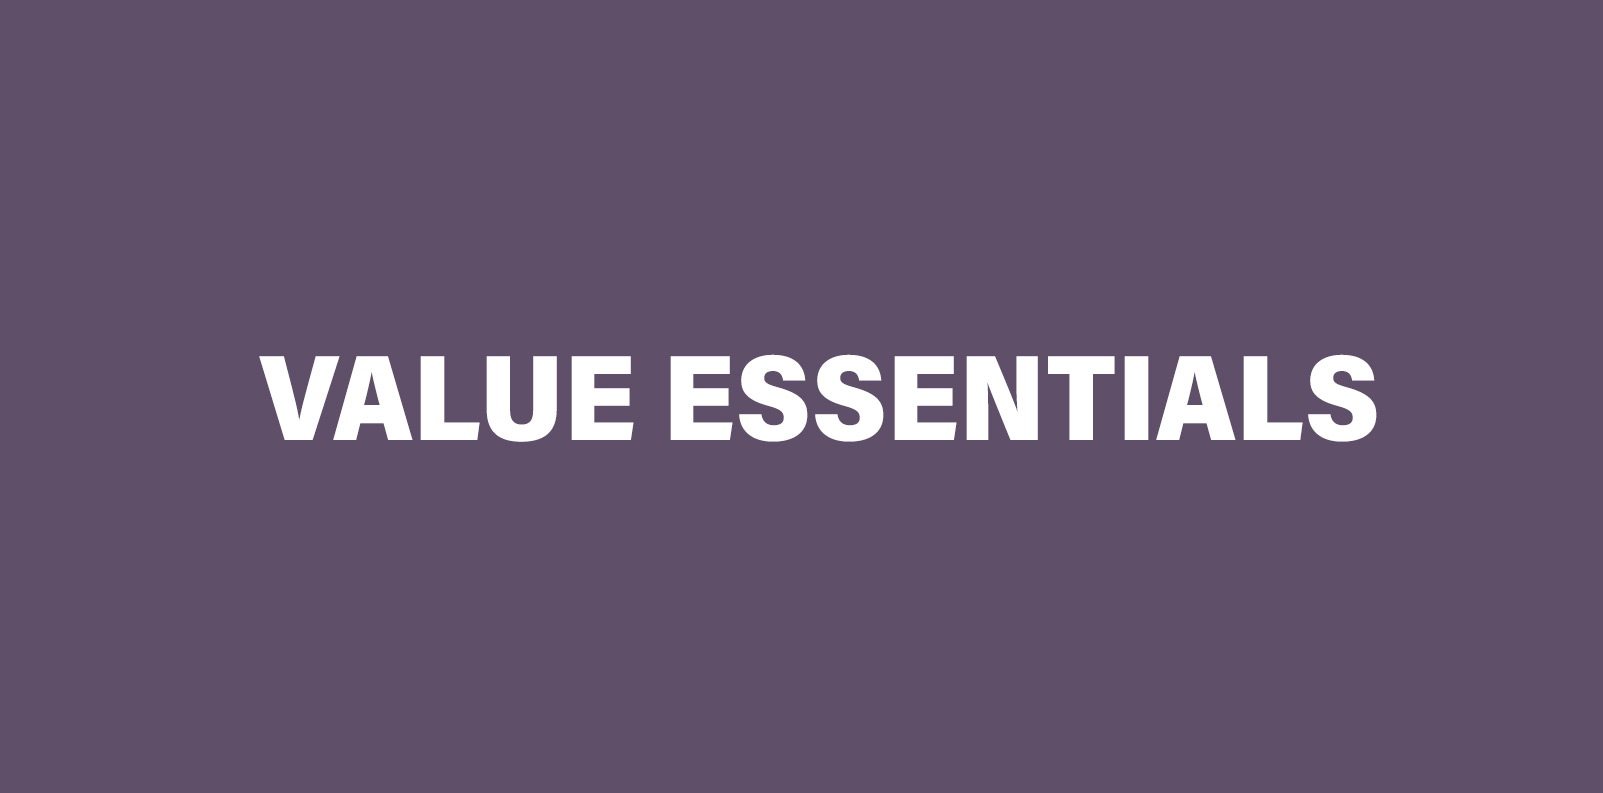 Value Essentials - Discounts 